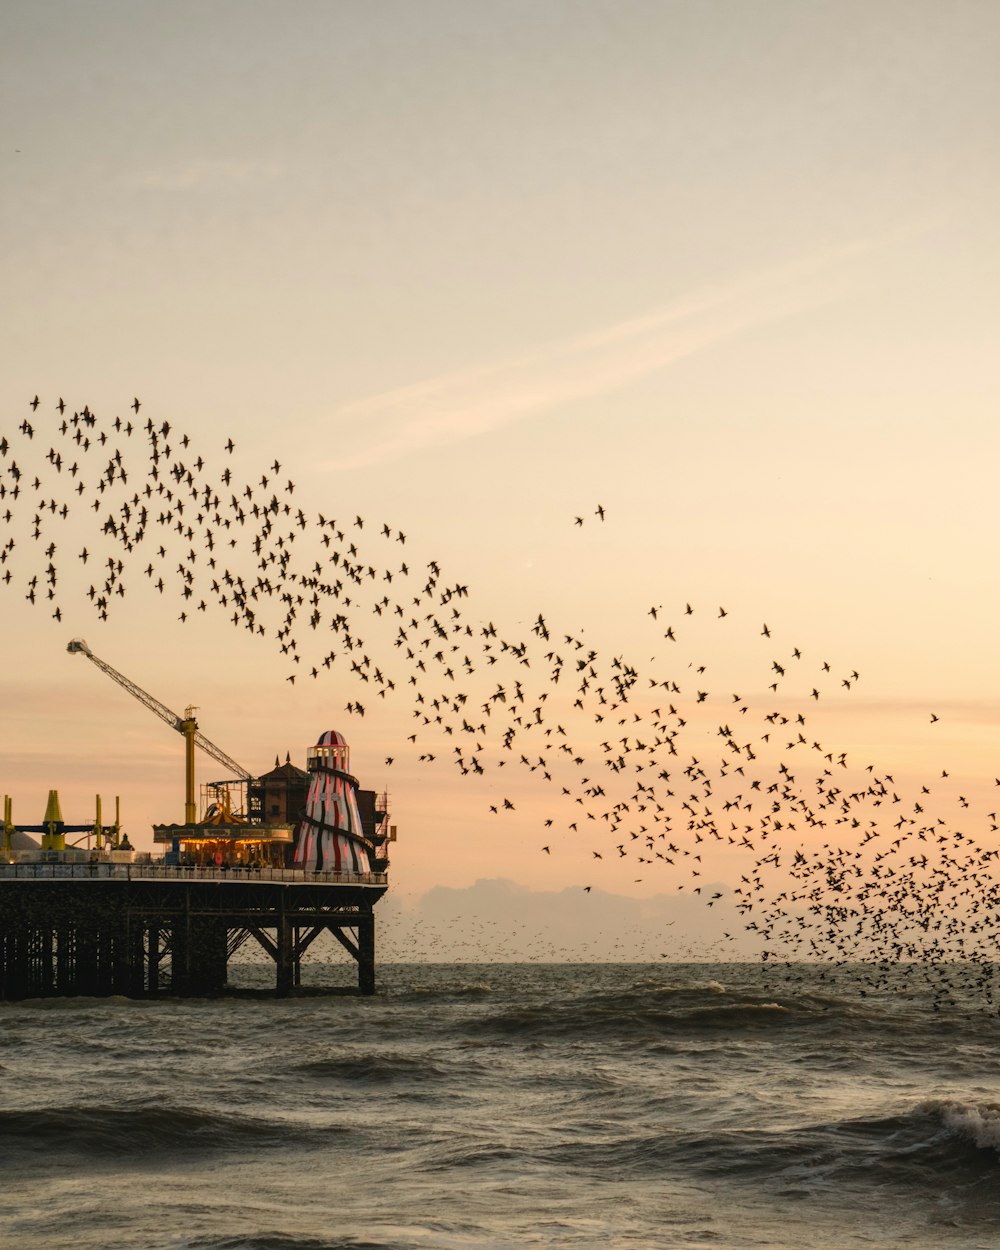 silhueta de pássaros voando sobre o mar durante o pôr do sol